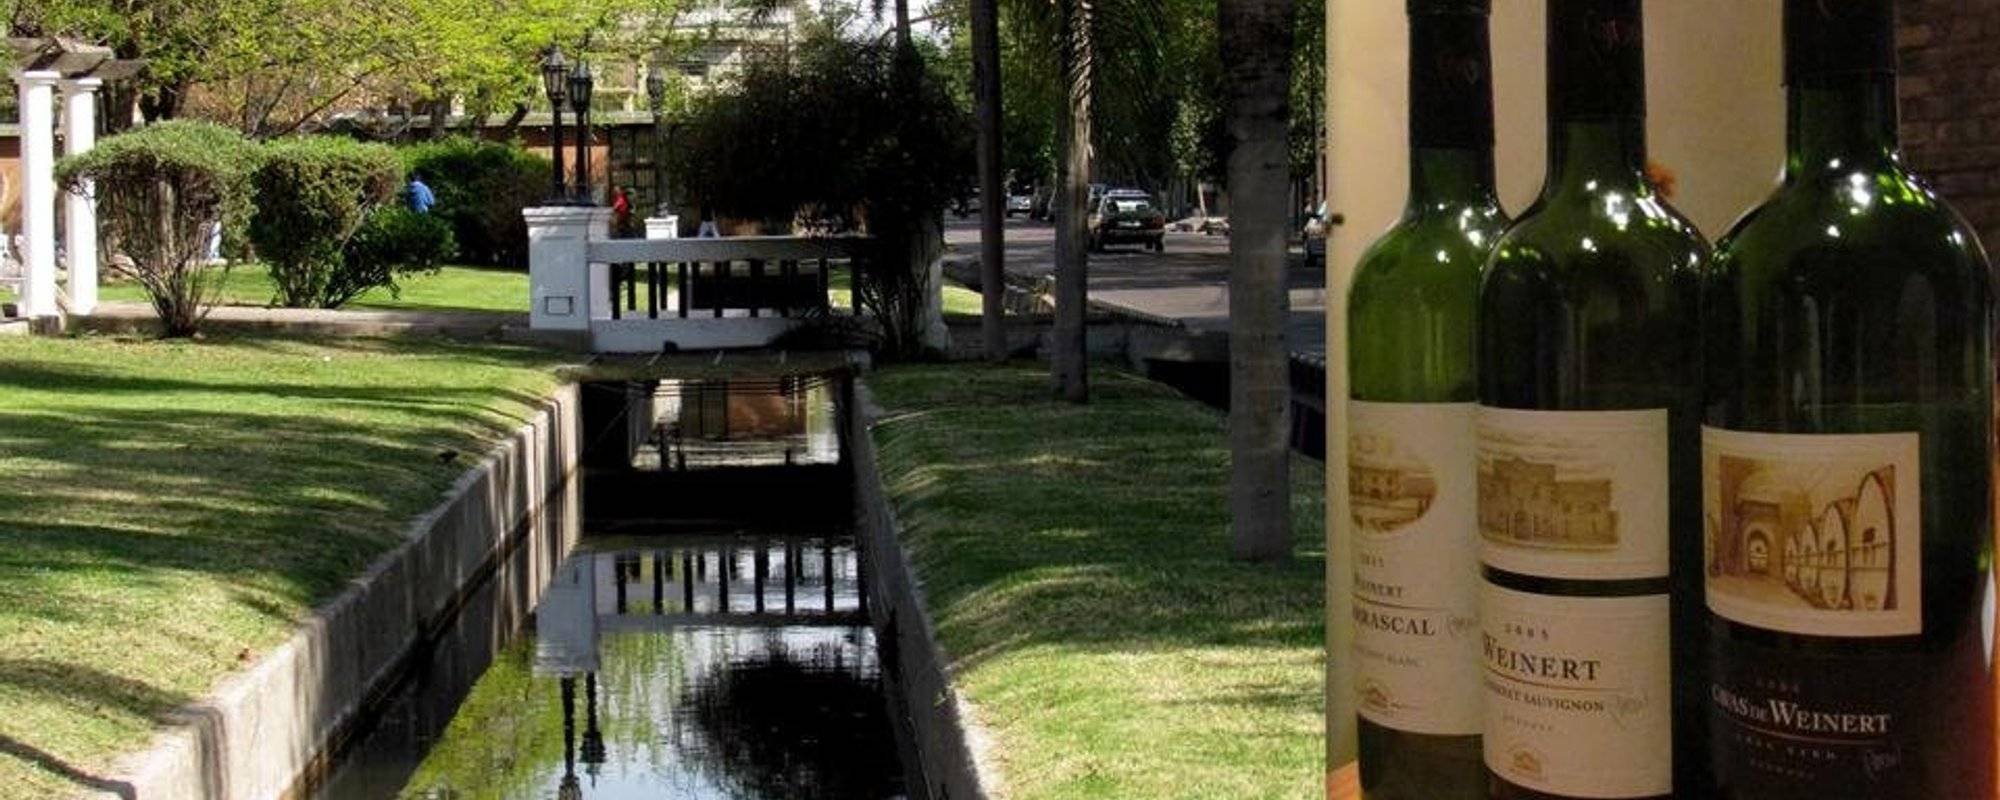 Meeting Mendoza part # 2: Mendoza City, international wine capital - Argentina [English Version]